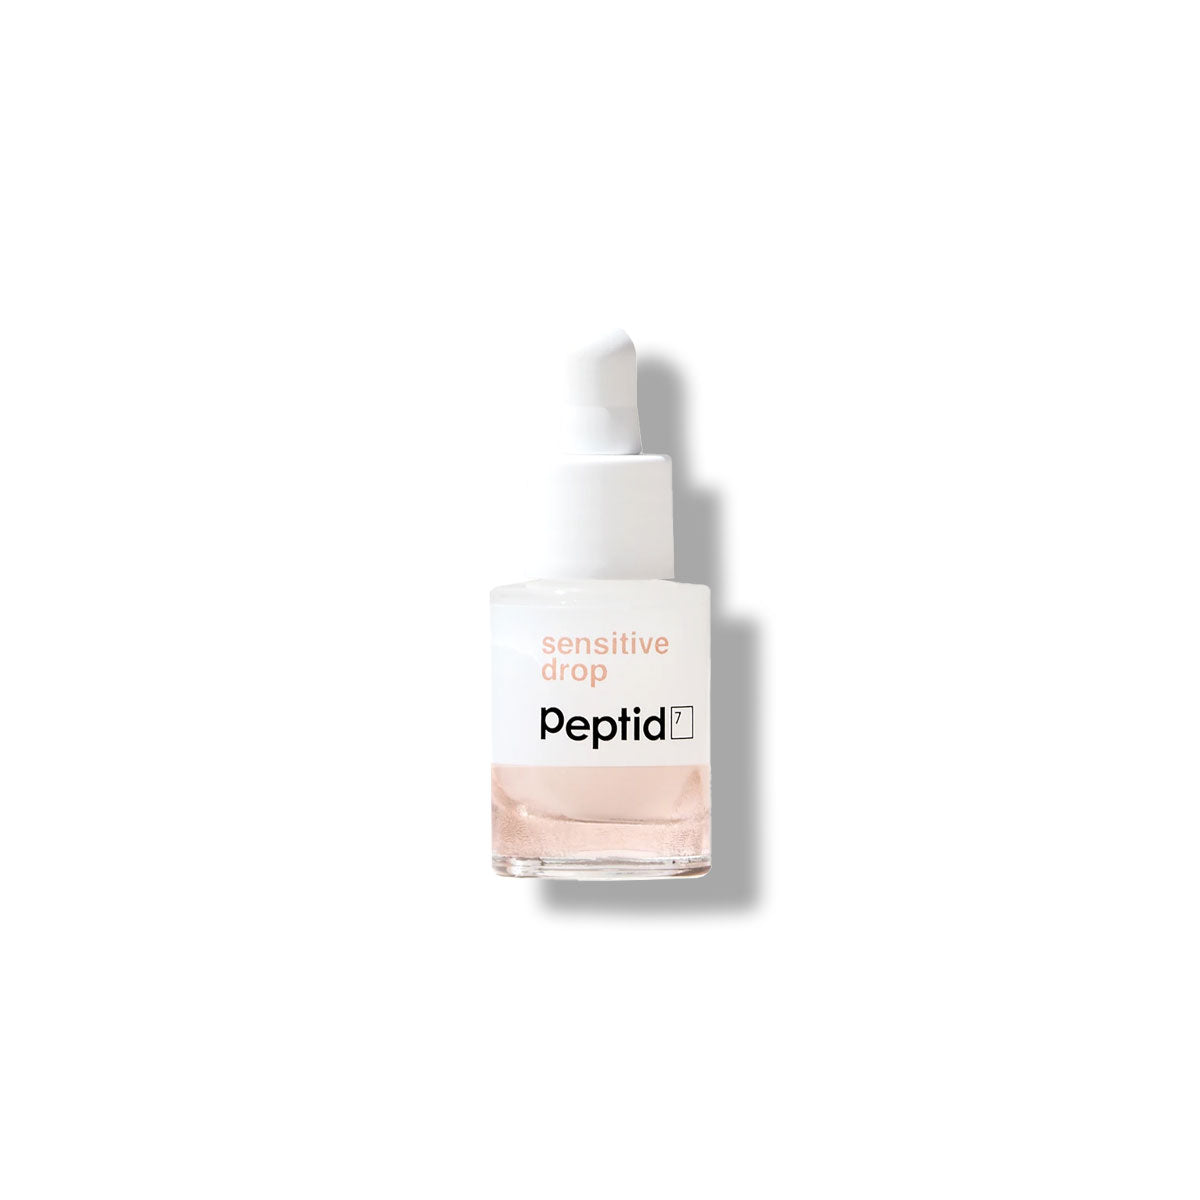 Sensitive drop Peptid7 sur BrowLab